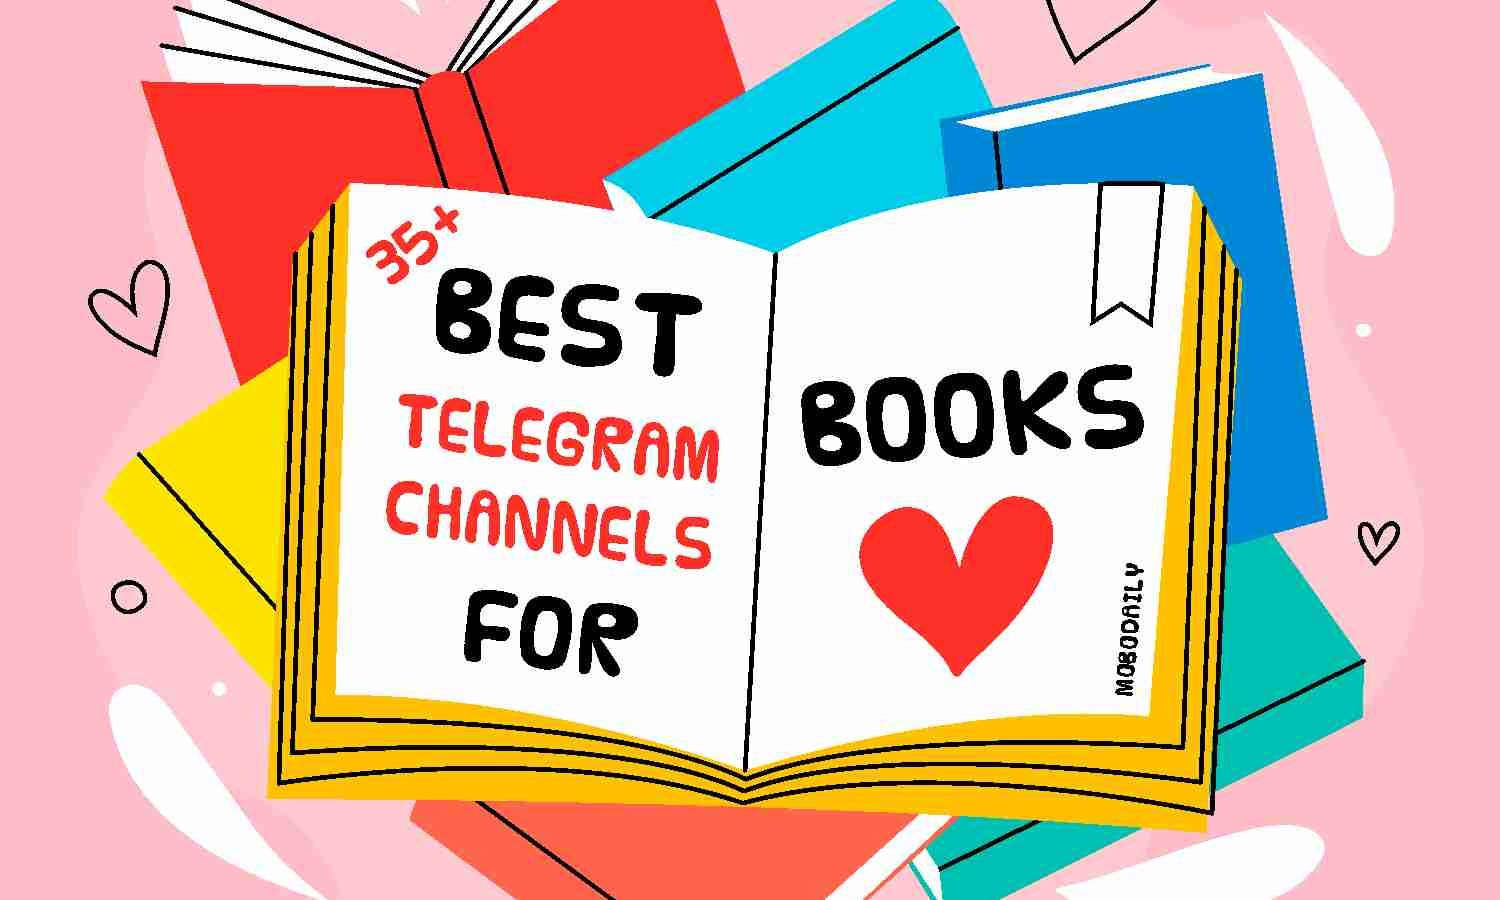 best-telegram-channels-for-books-mobodaily